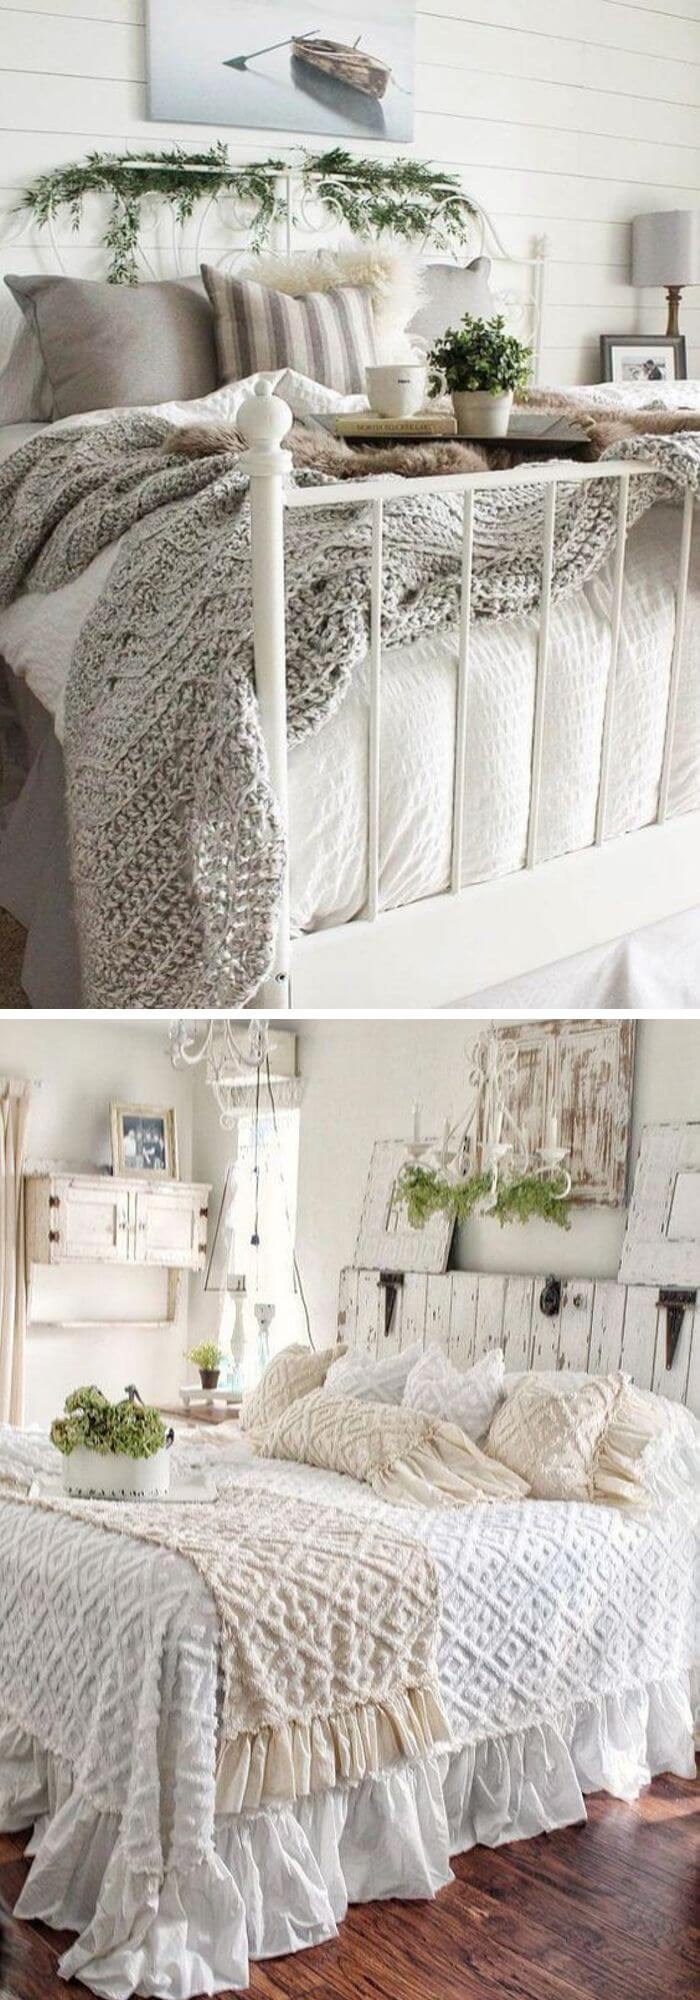 7 farmhouse winter decor ideas bedroom